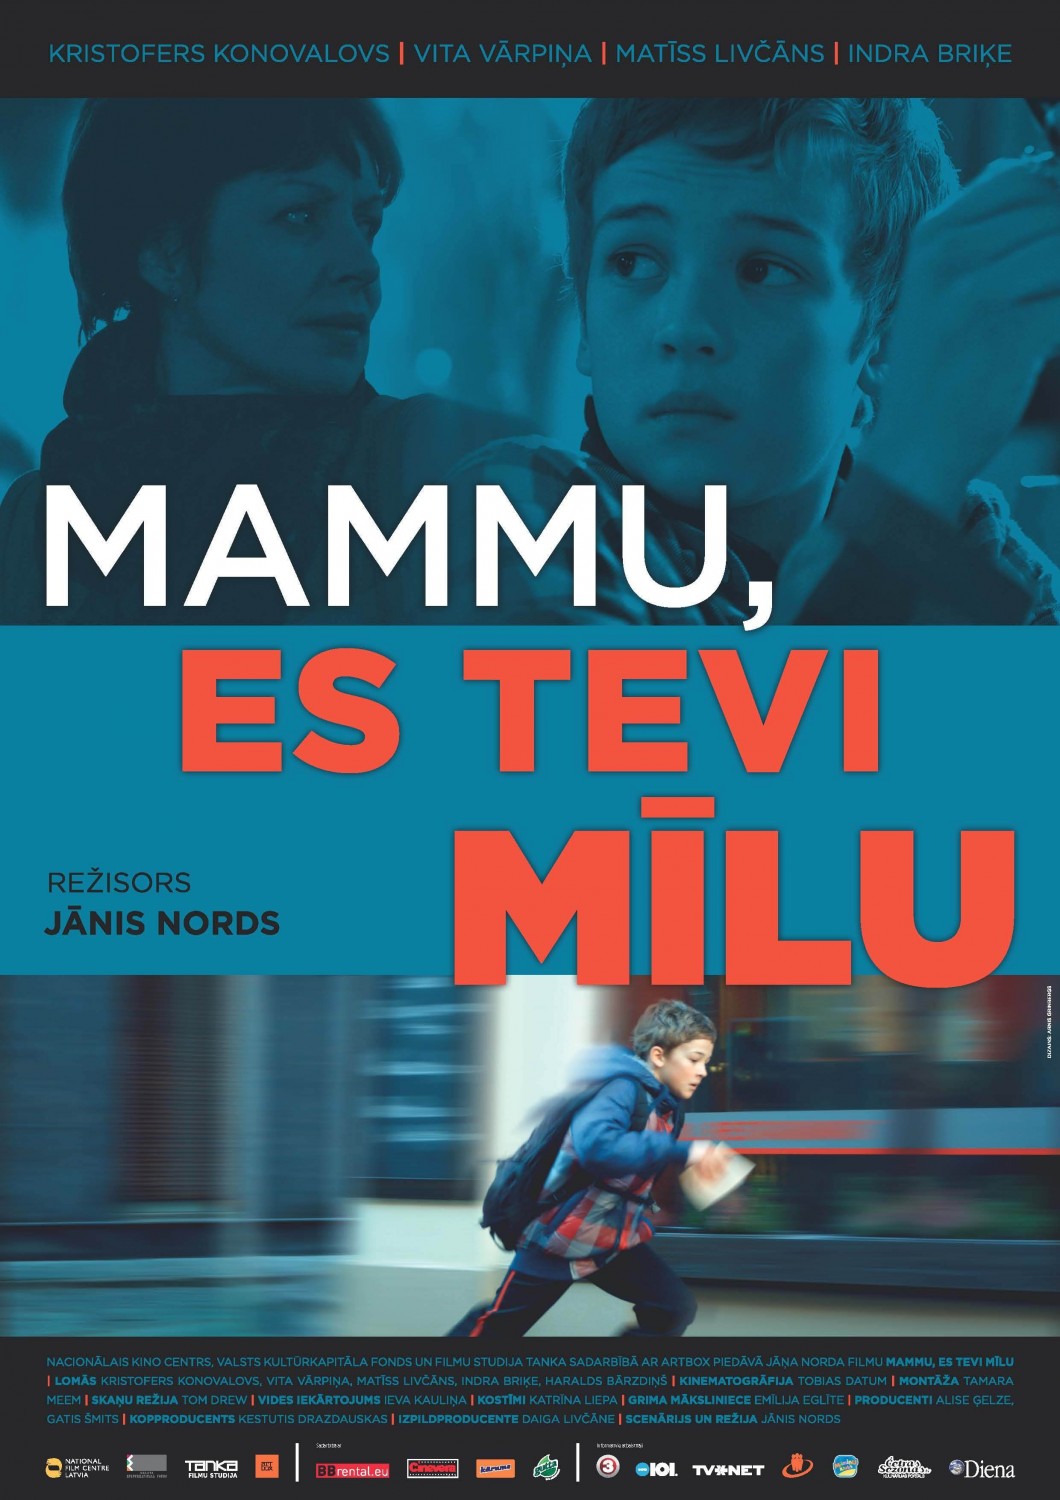 Extra Large Movie Poster Image for Mammu, es Tevi milu 